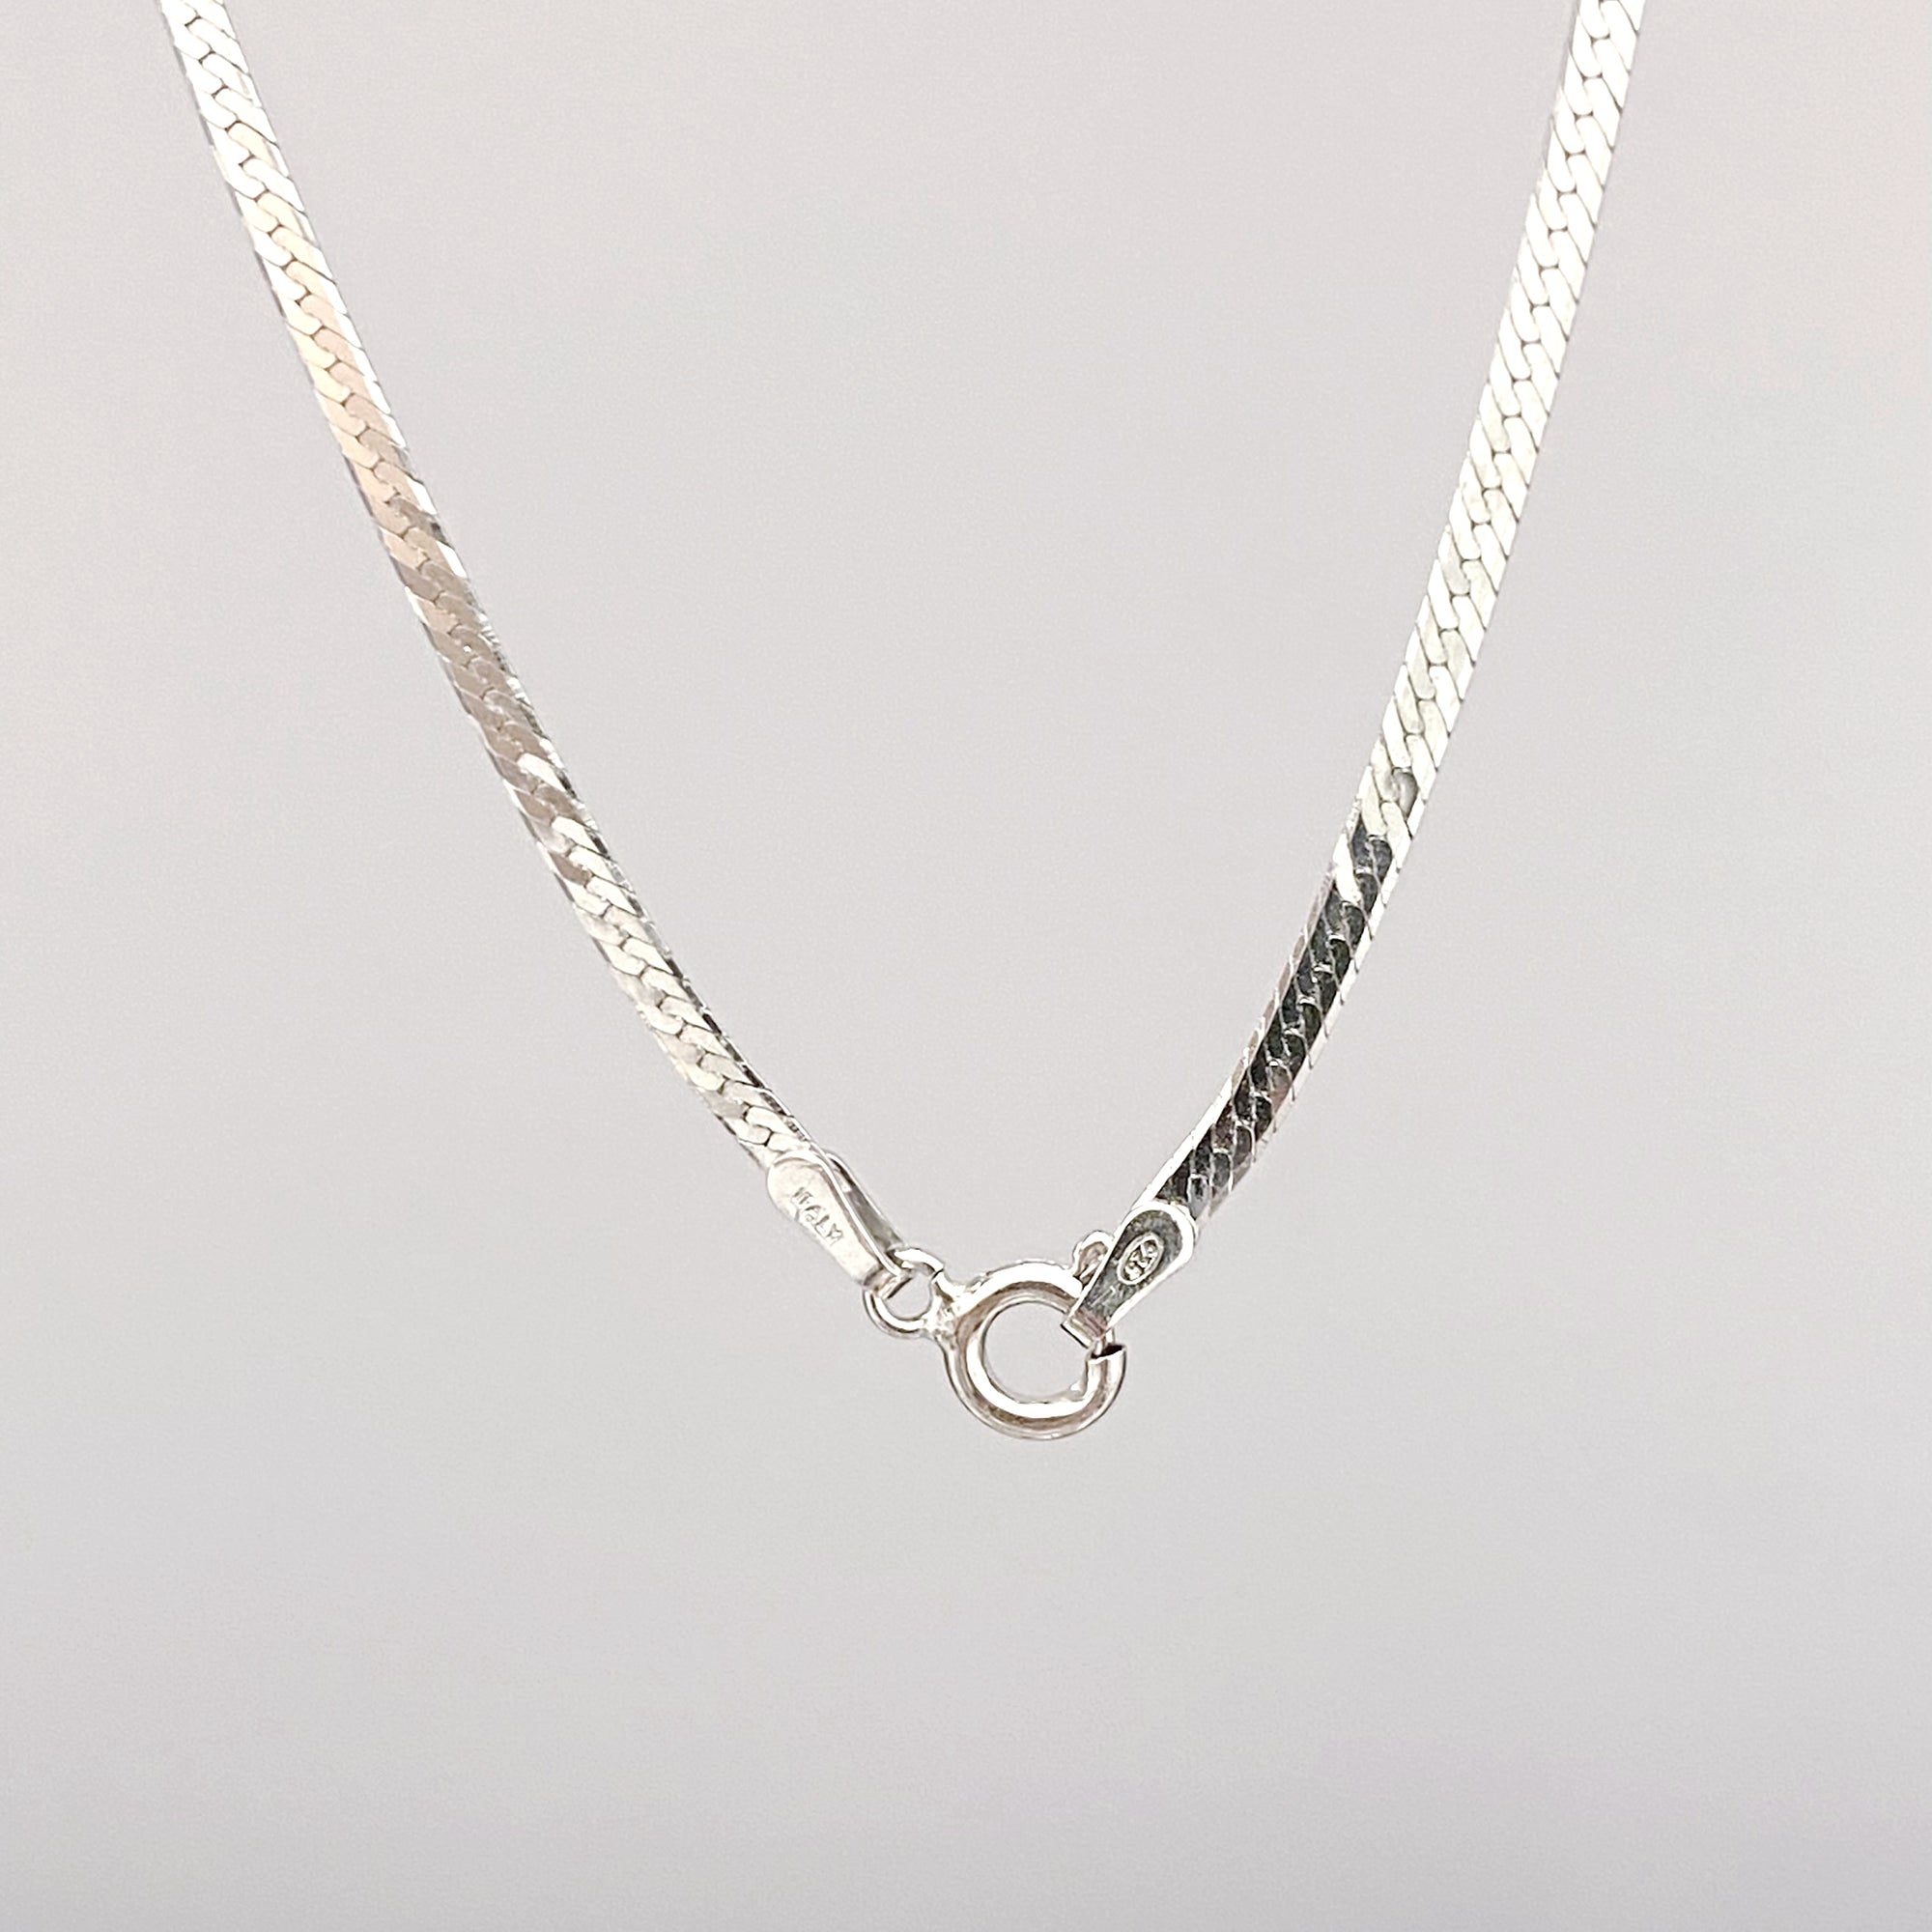 Herringbone Chain Necklace - Long